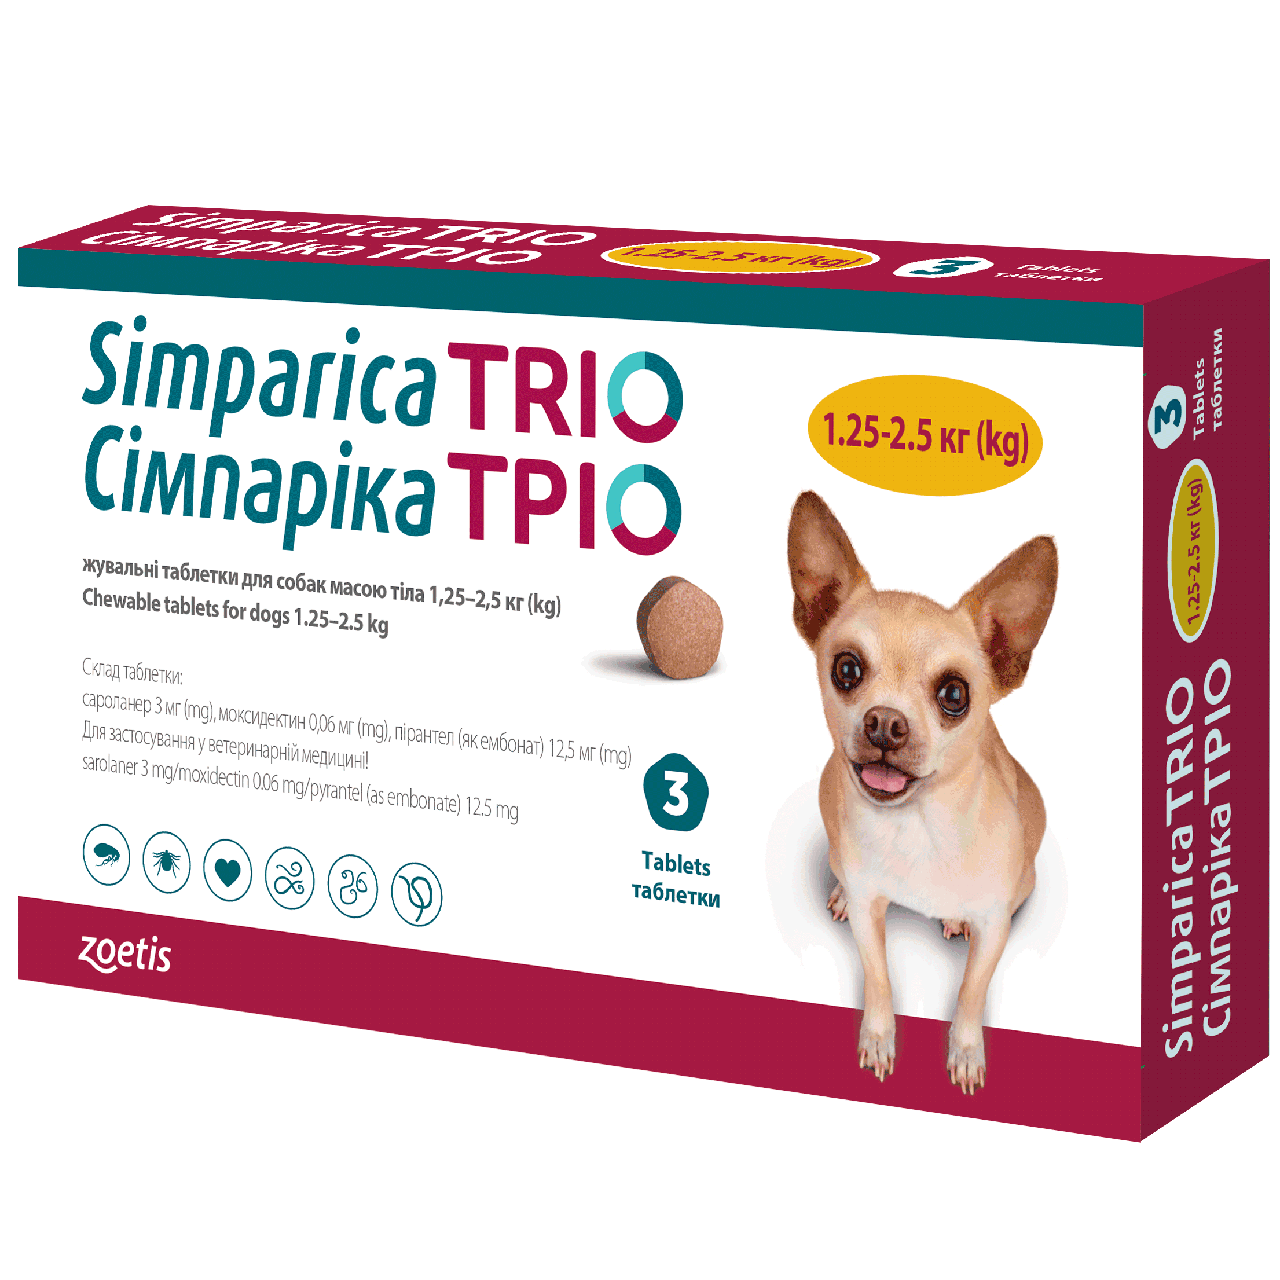 Simparica Тріо Zoetis (сароланер, моксидектин, пірантел) для собак 1,3-2,5 кг 3 таблетки